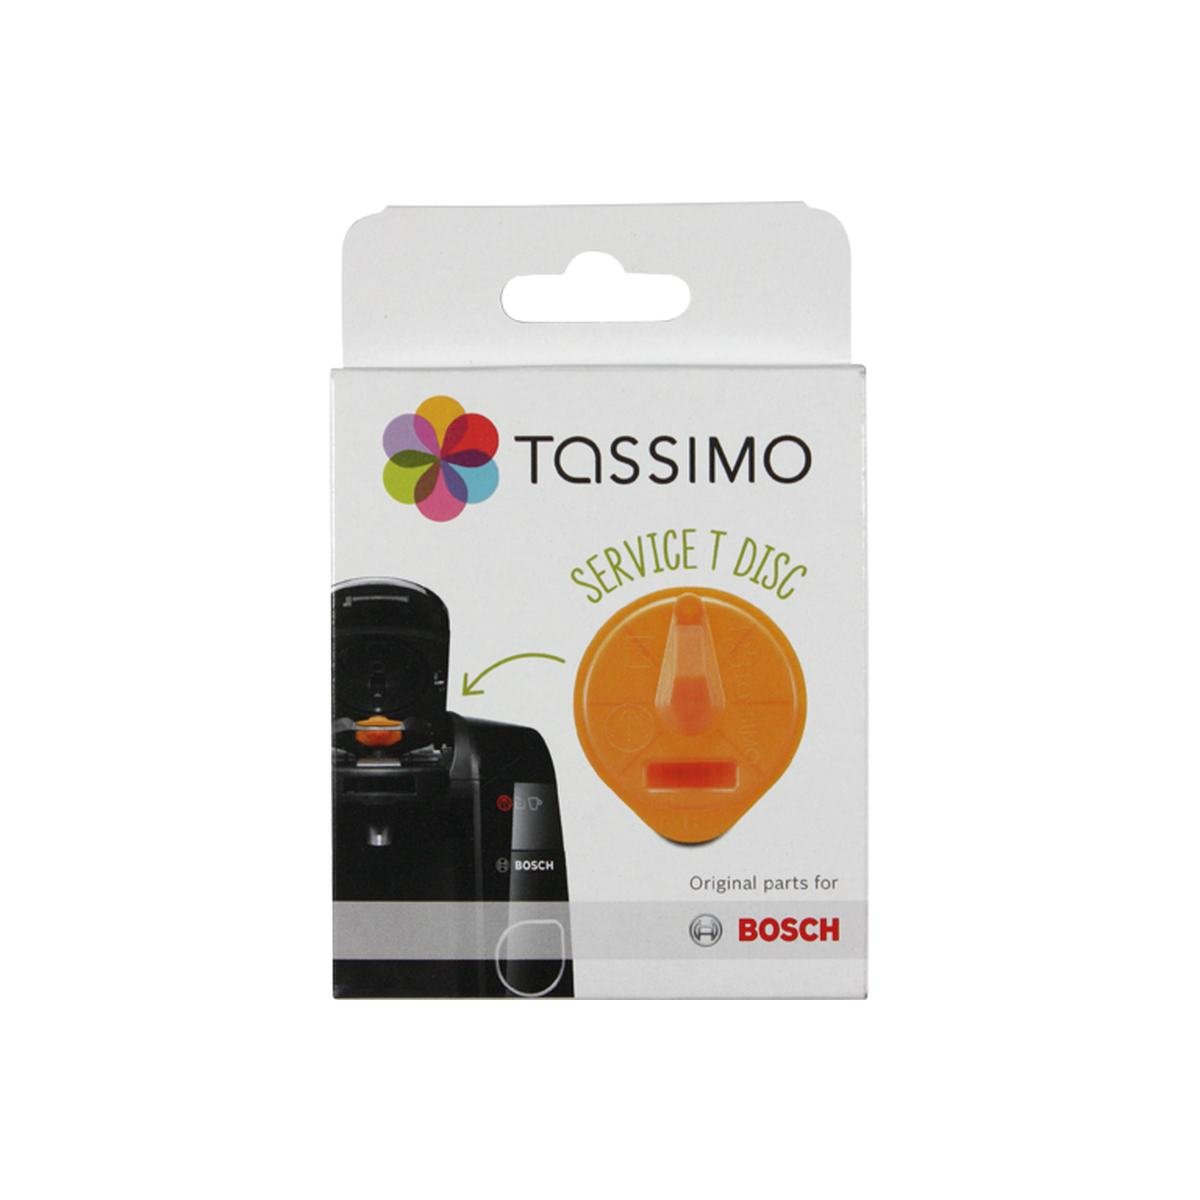 Service T-disc orange til Tassimo kaffemaskine